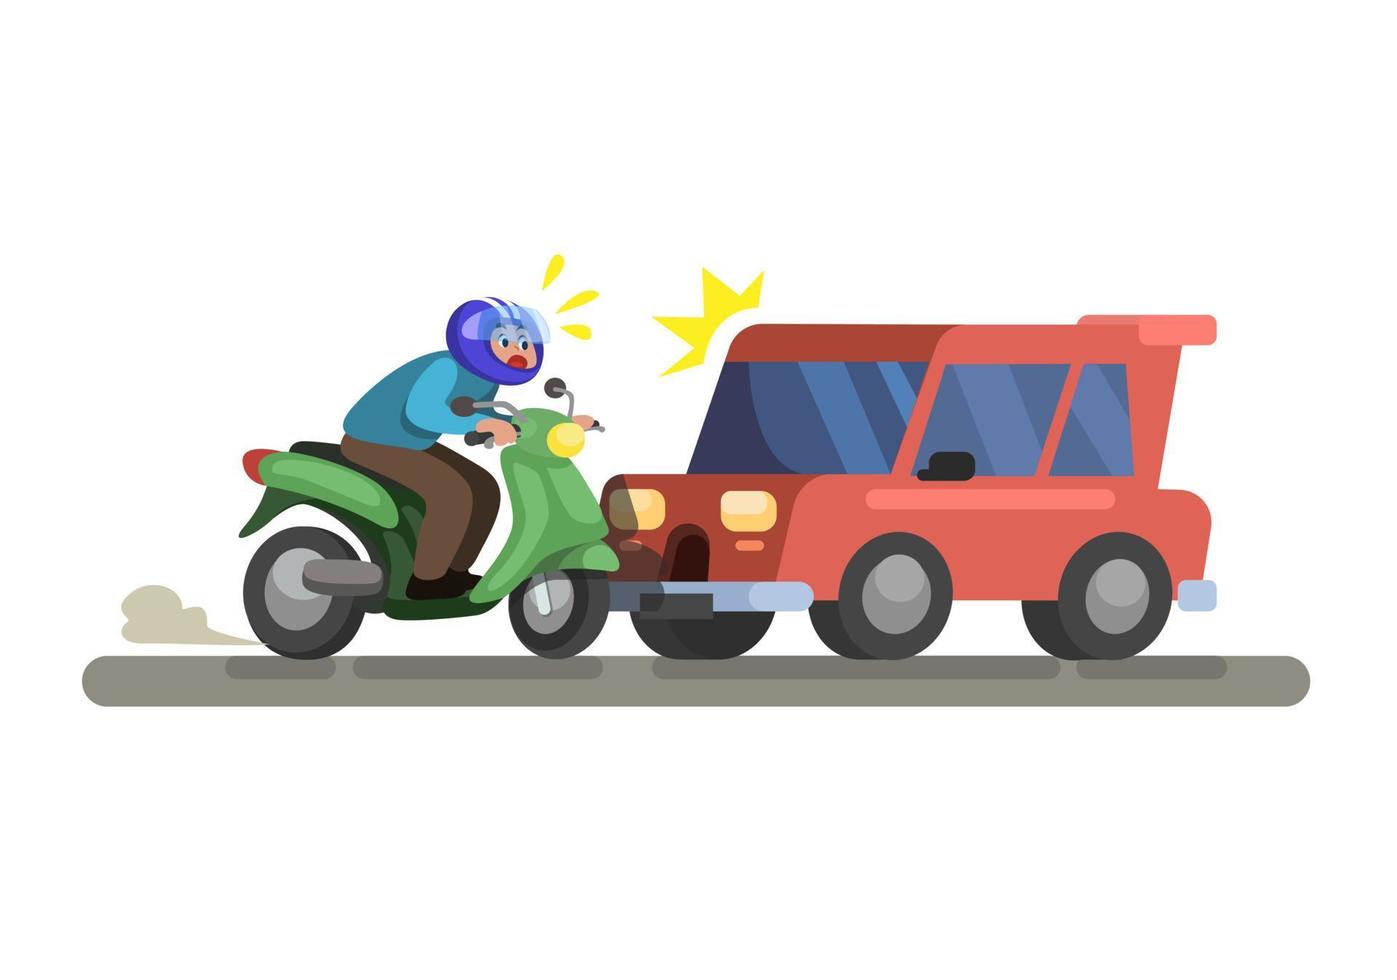 Car crash accident hitting motorbike scene cartoon illustration vector